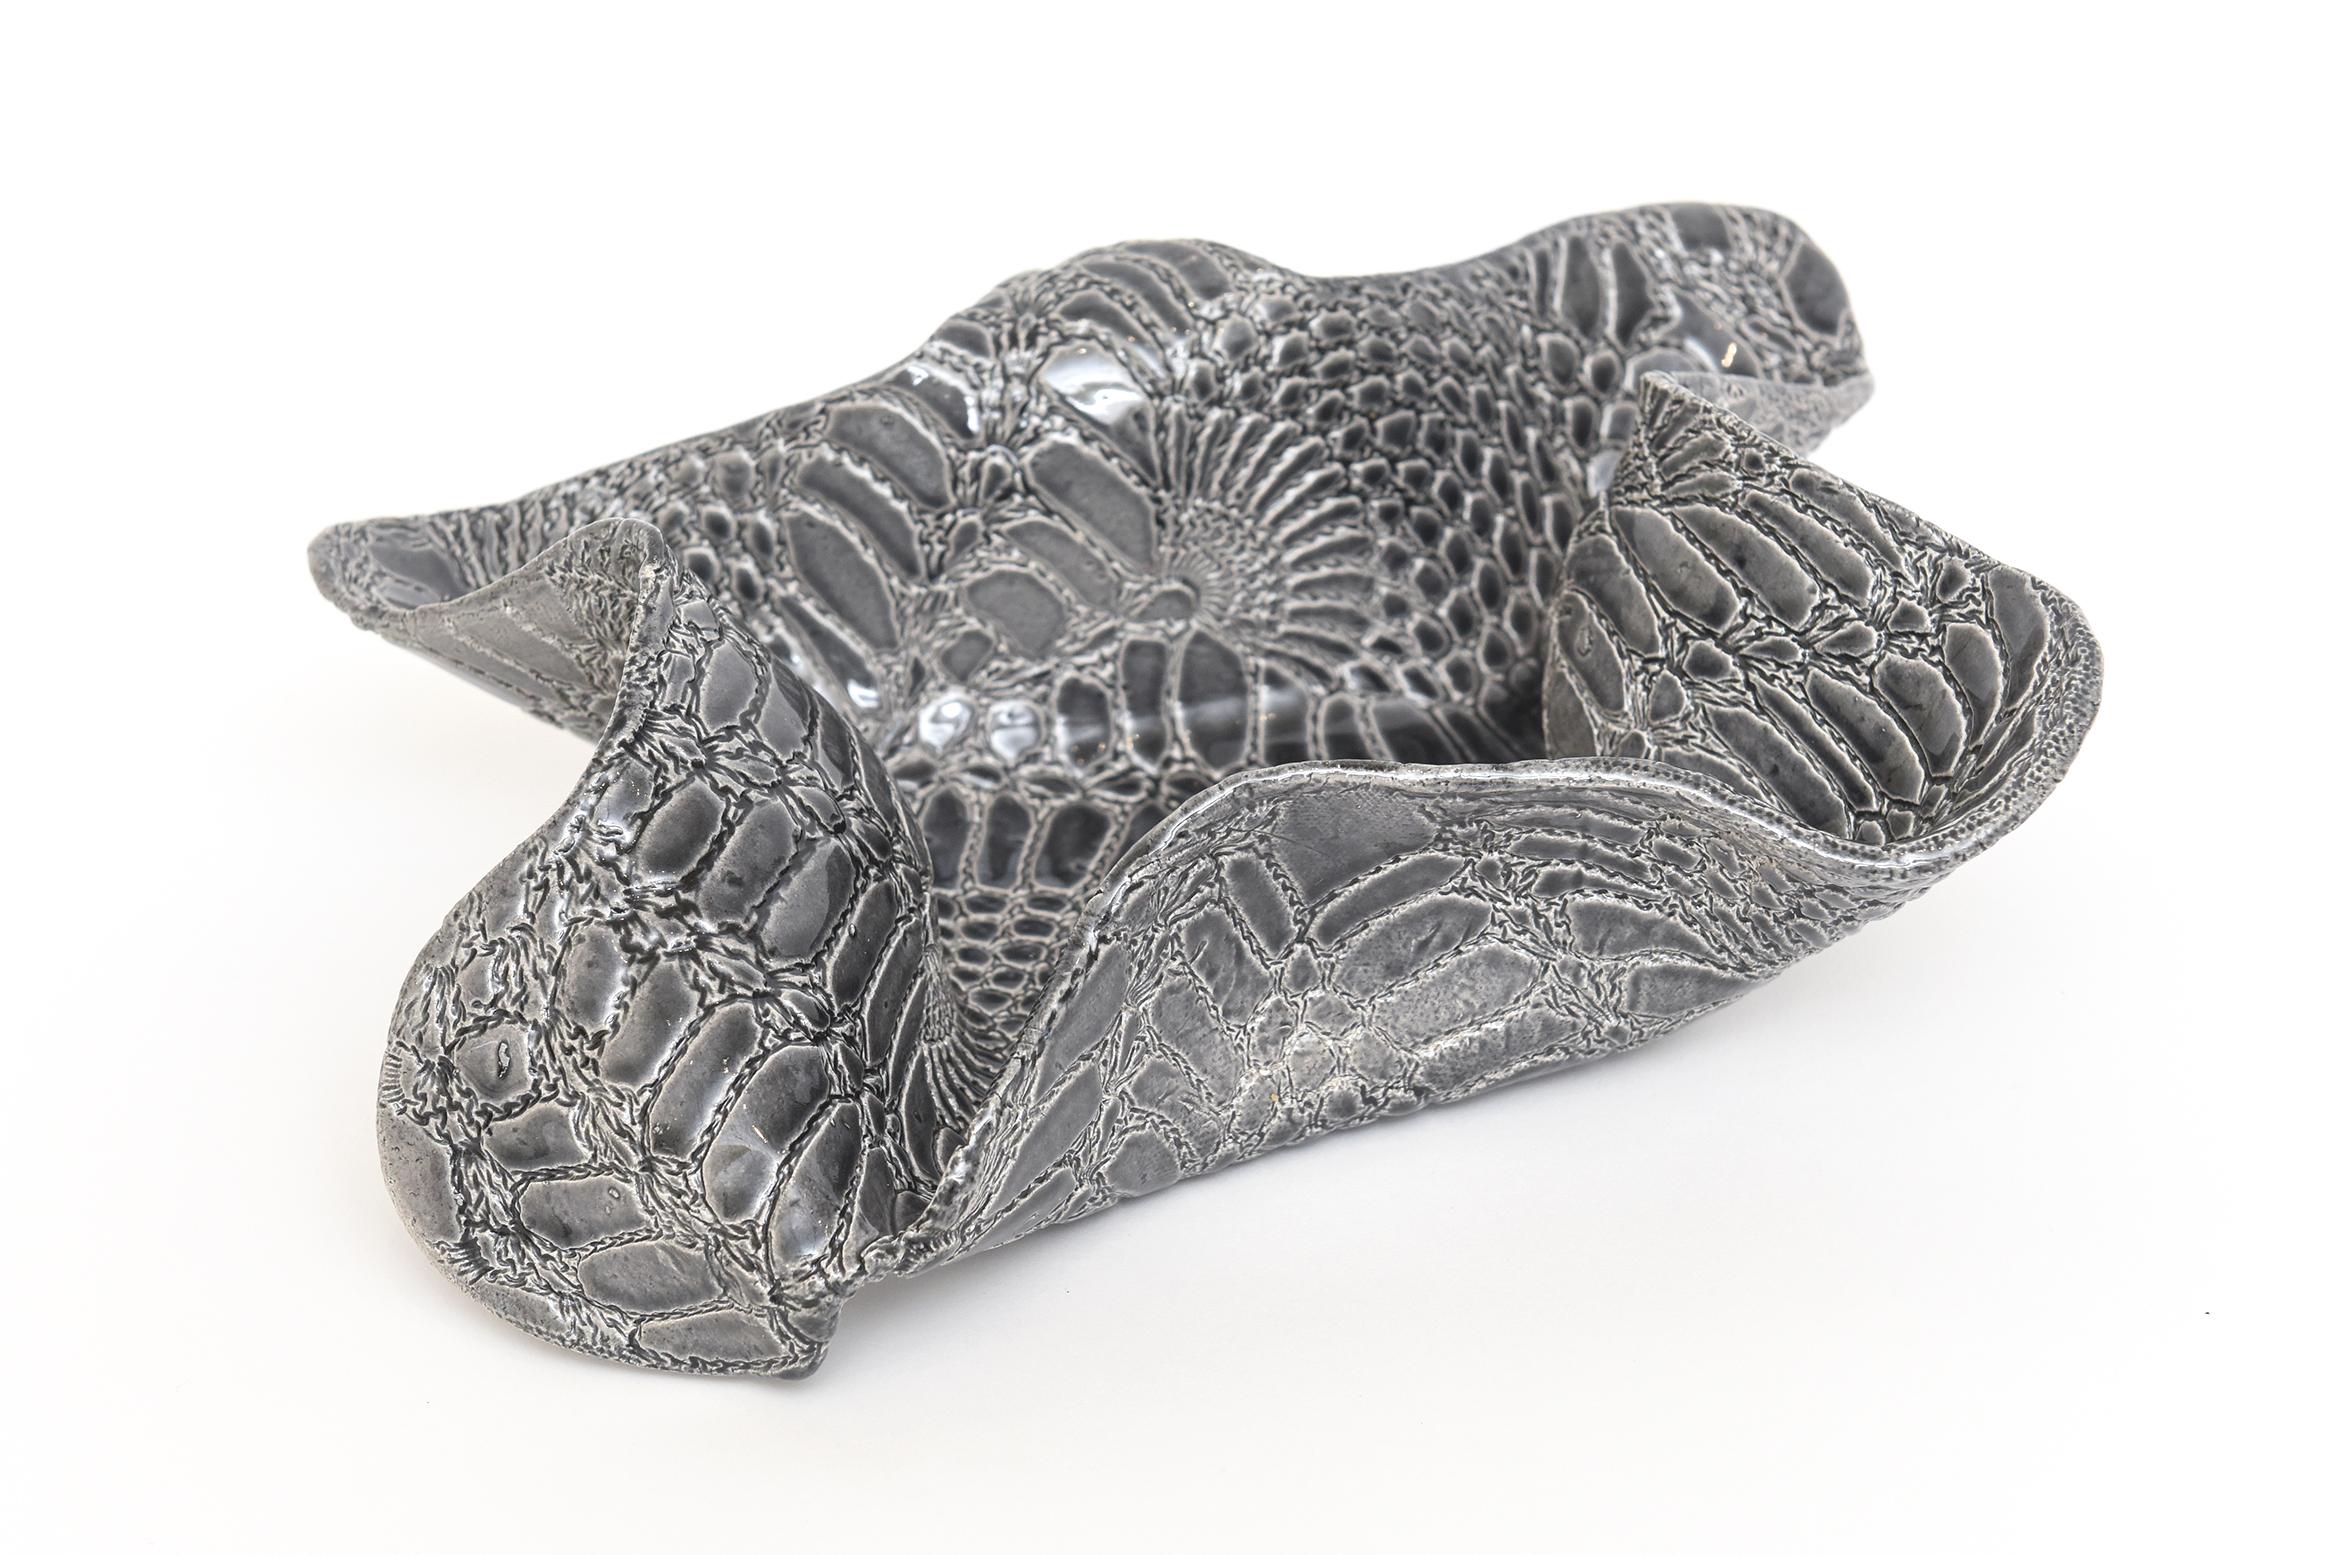 Ceramic Textural Snakeskin Pattern Grey White Biomorphic Sculptural Bowl For Sale 5